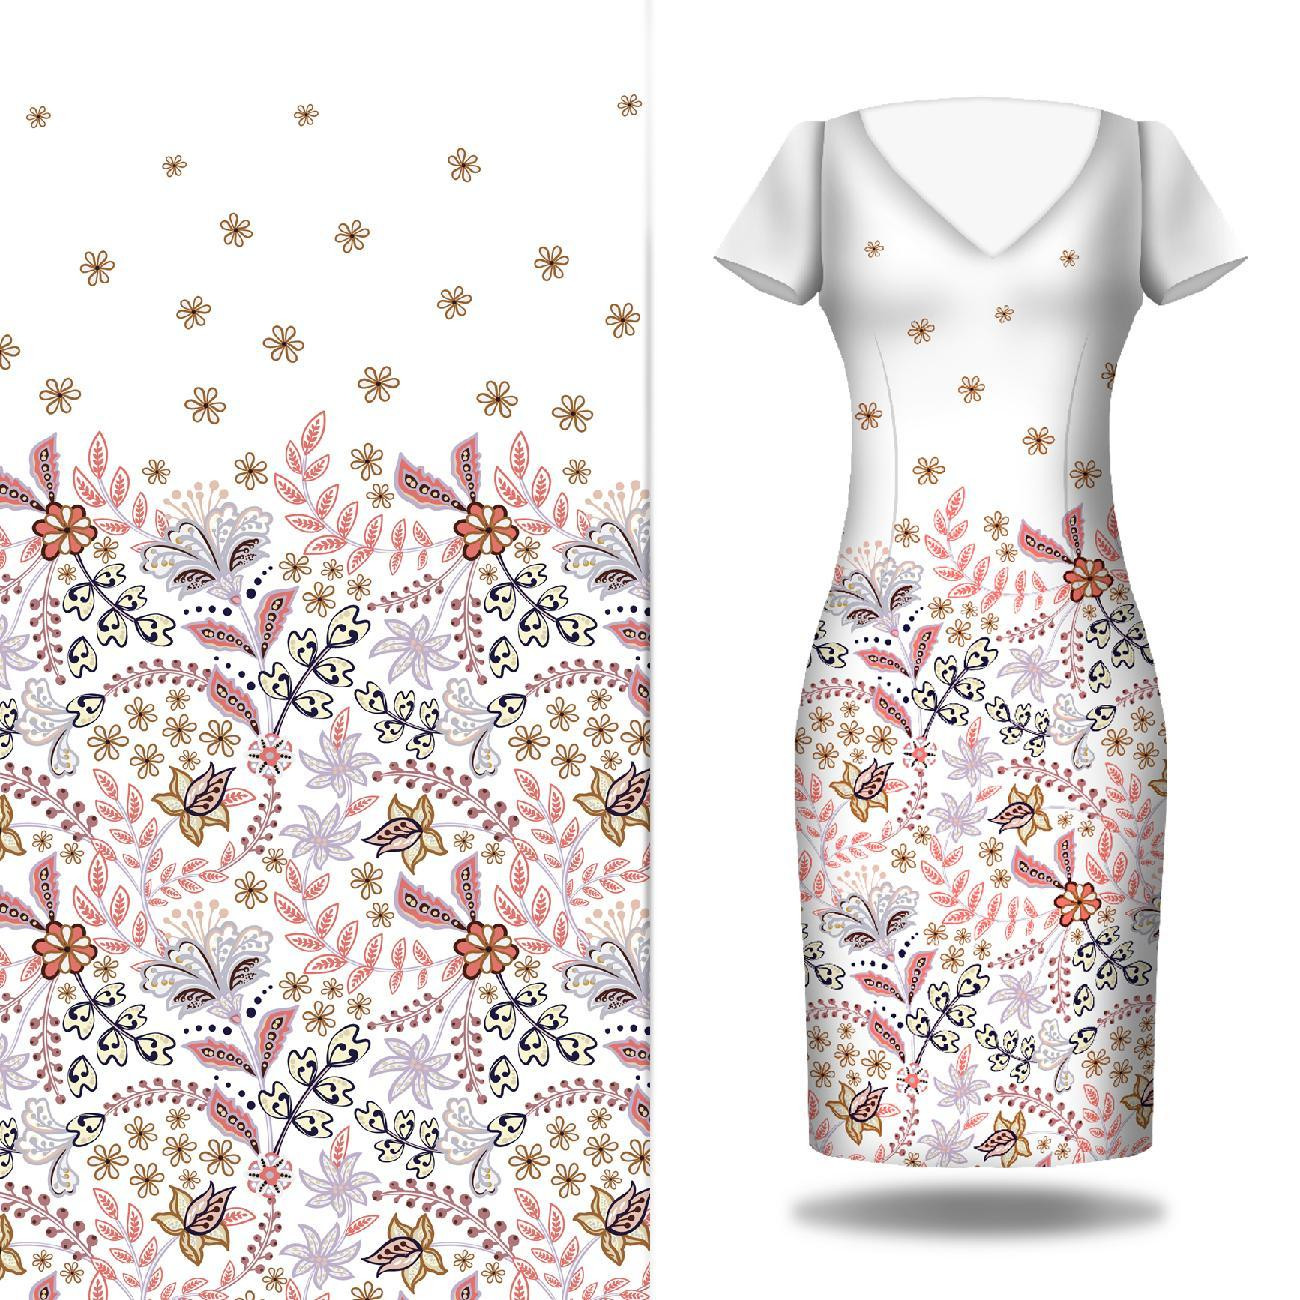 FLOWERS (pattern no. 3) / white - dress panel Satin